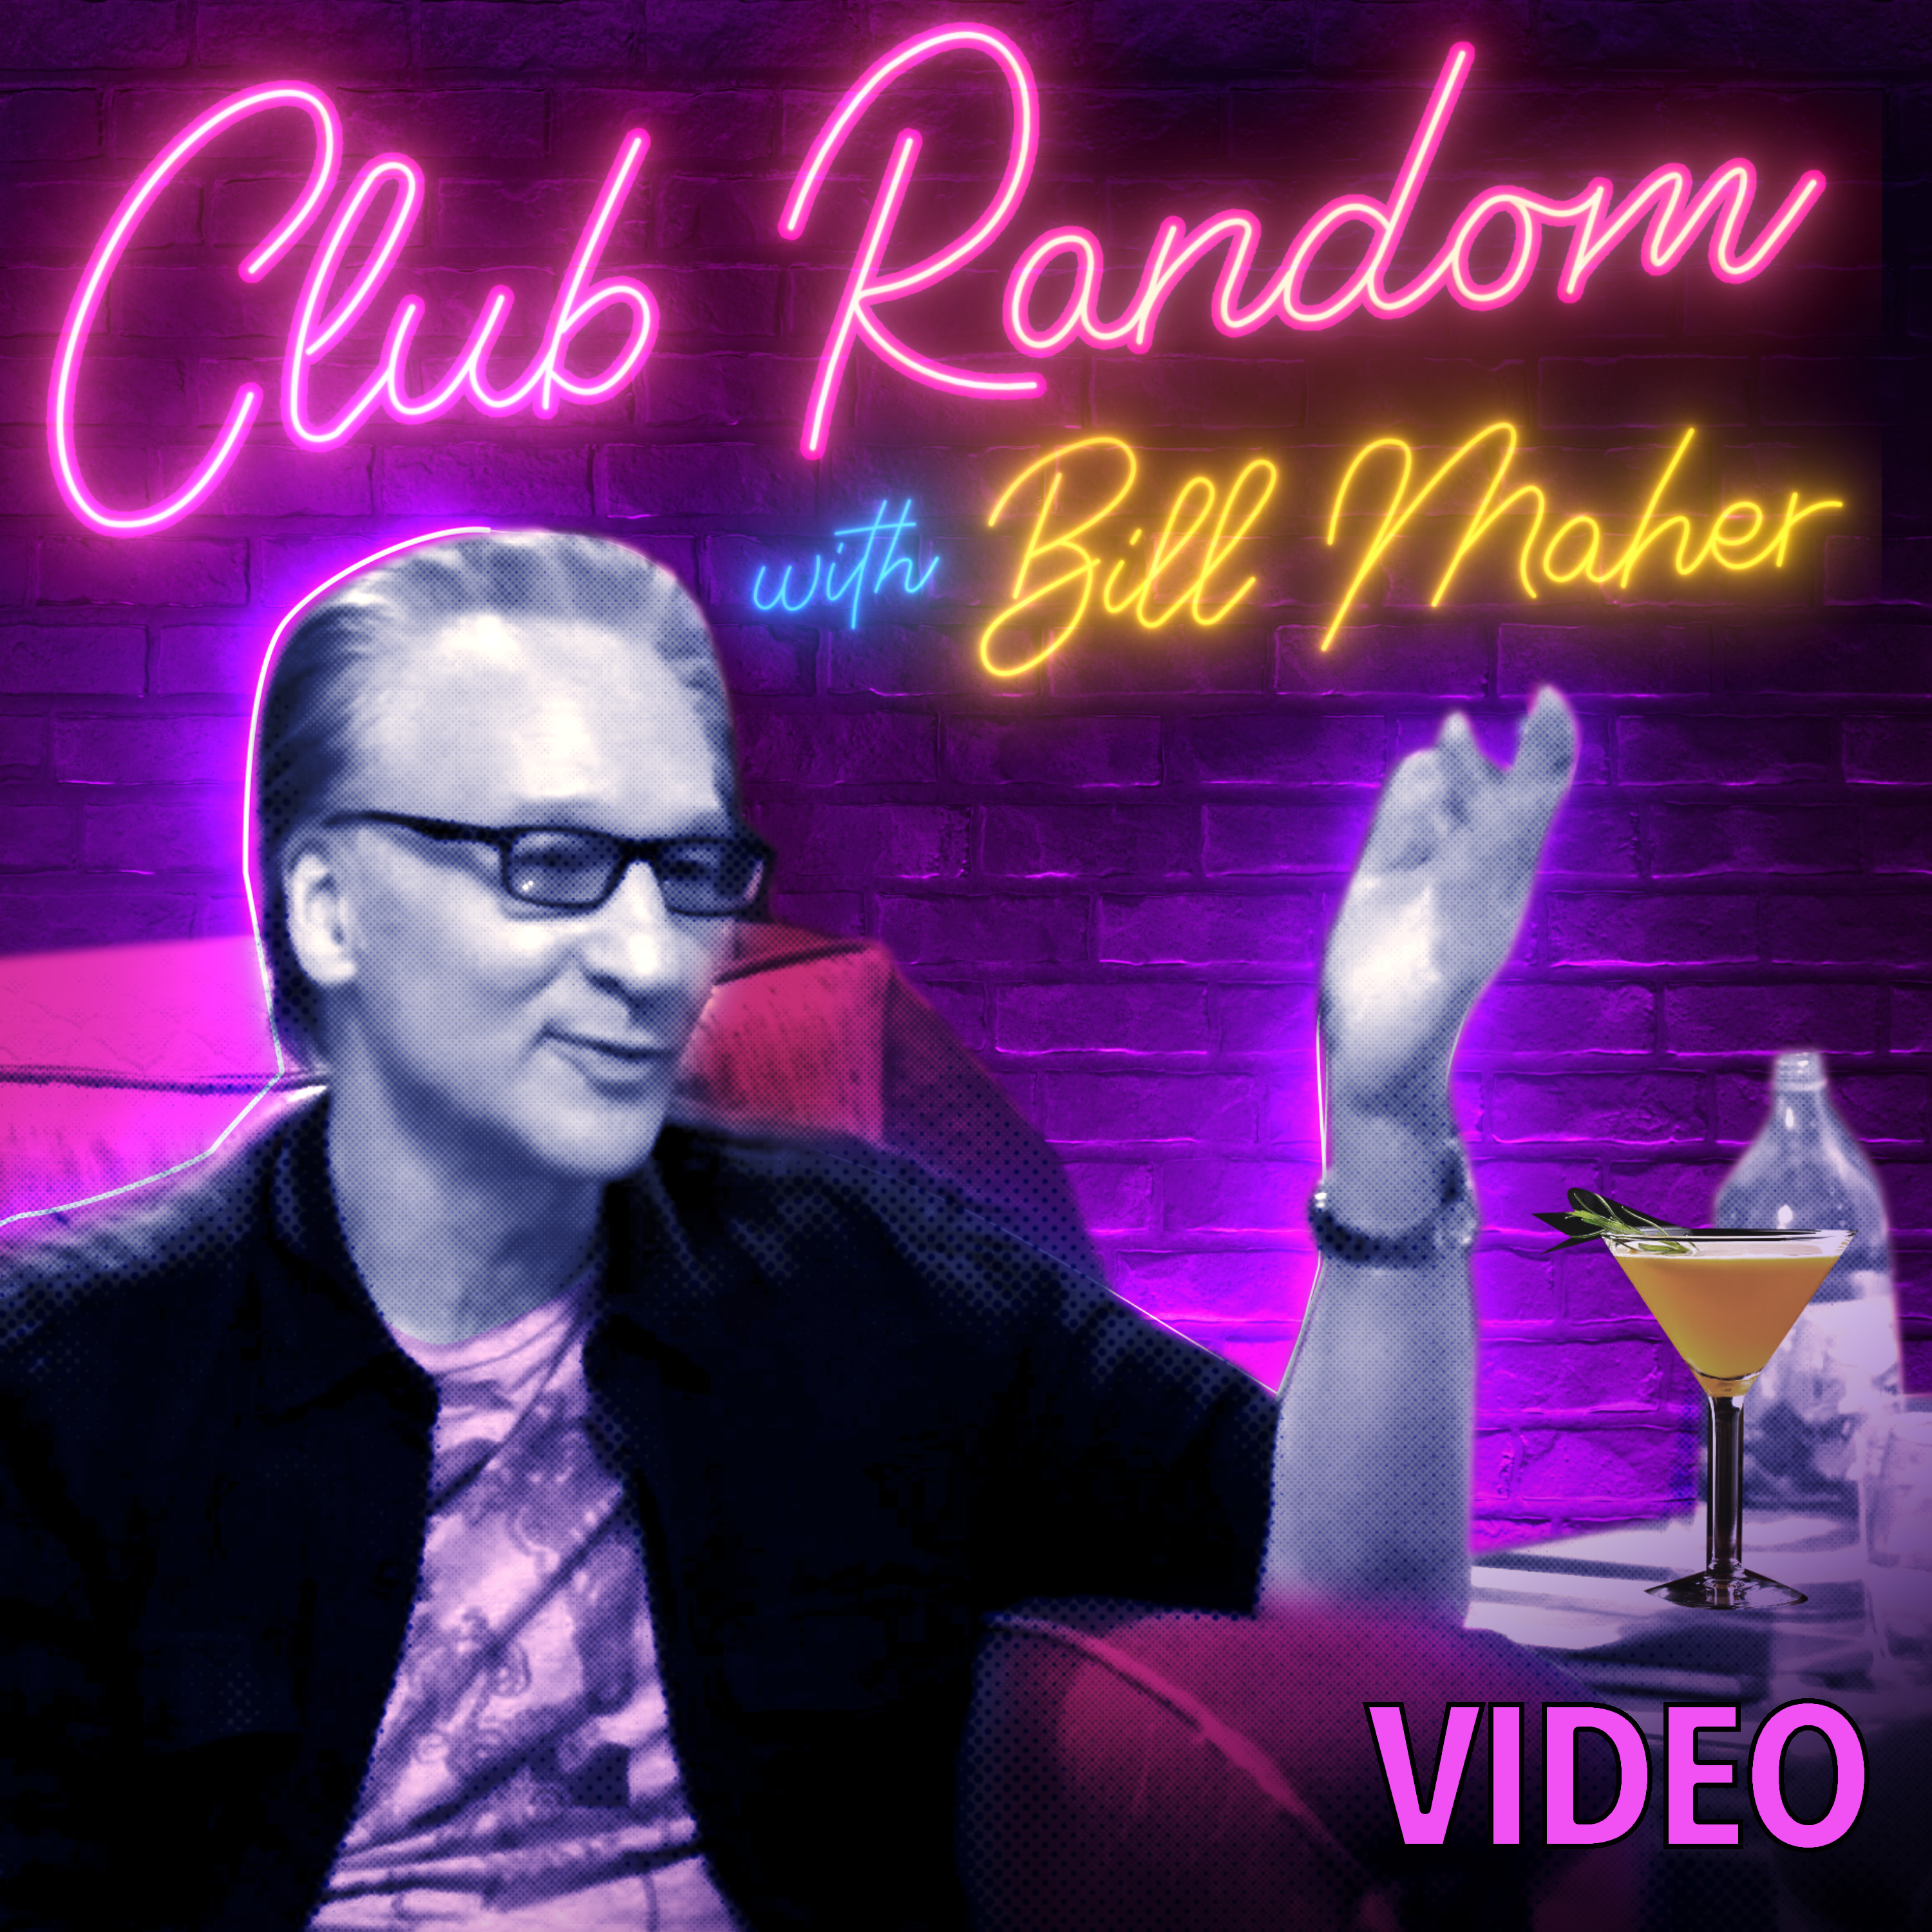 Video: Rachel Bilson | Club Random with Bill Maher